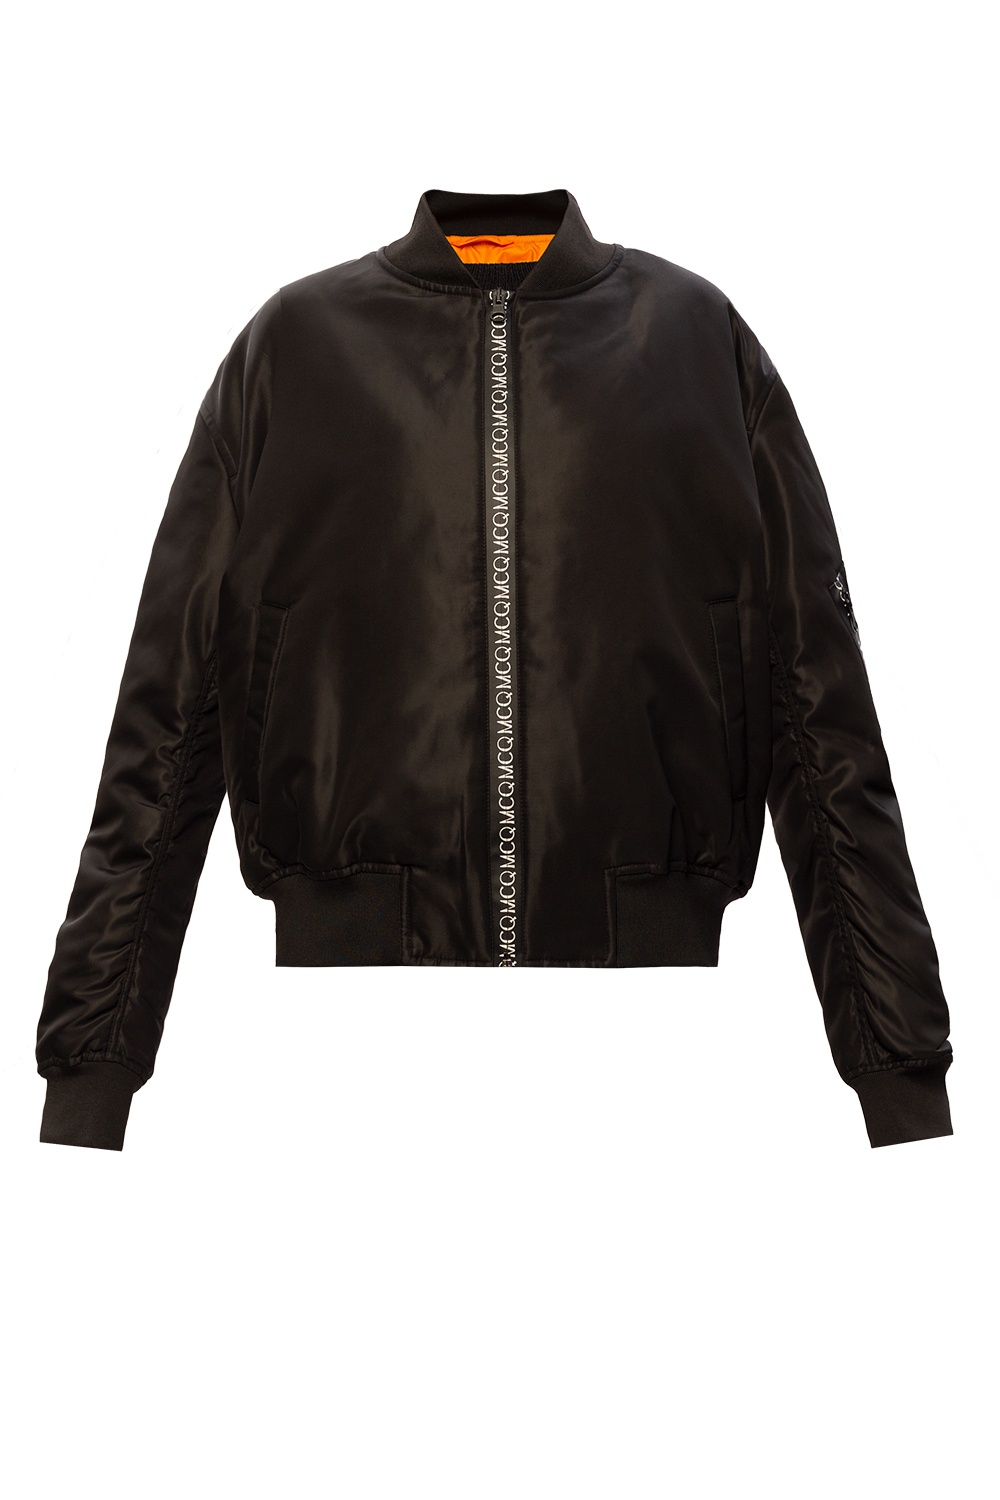 mcq bomber jacket